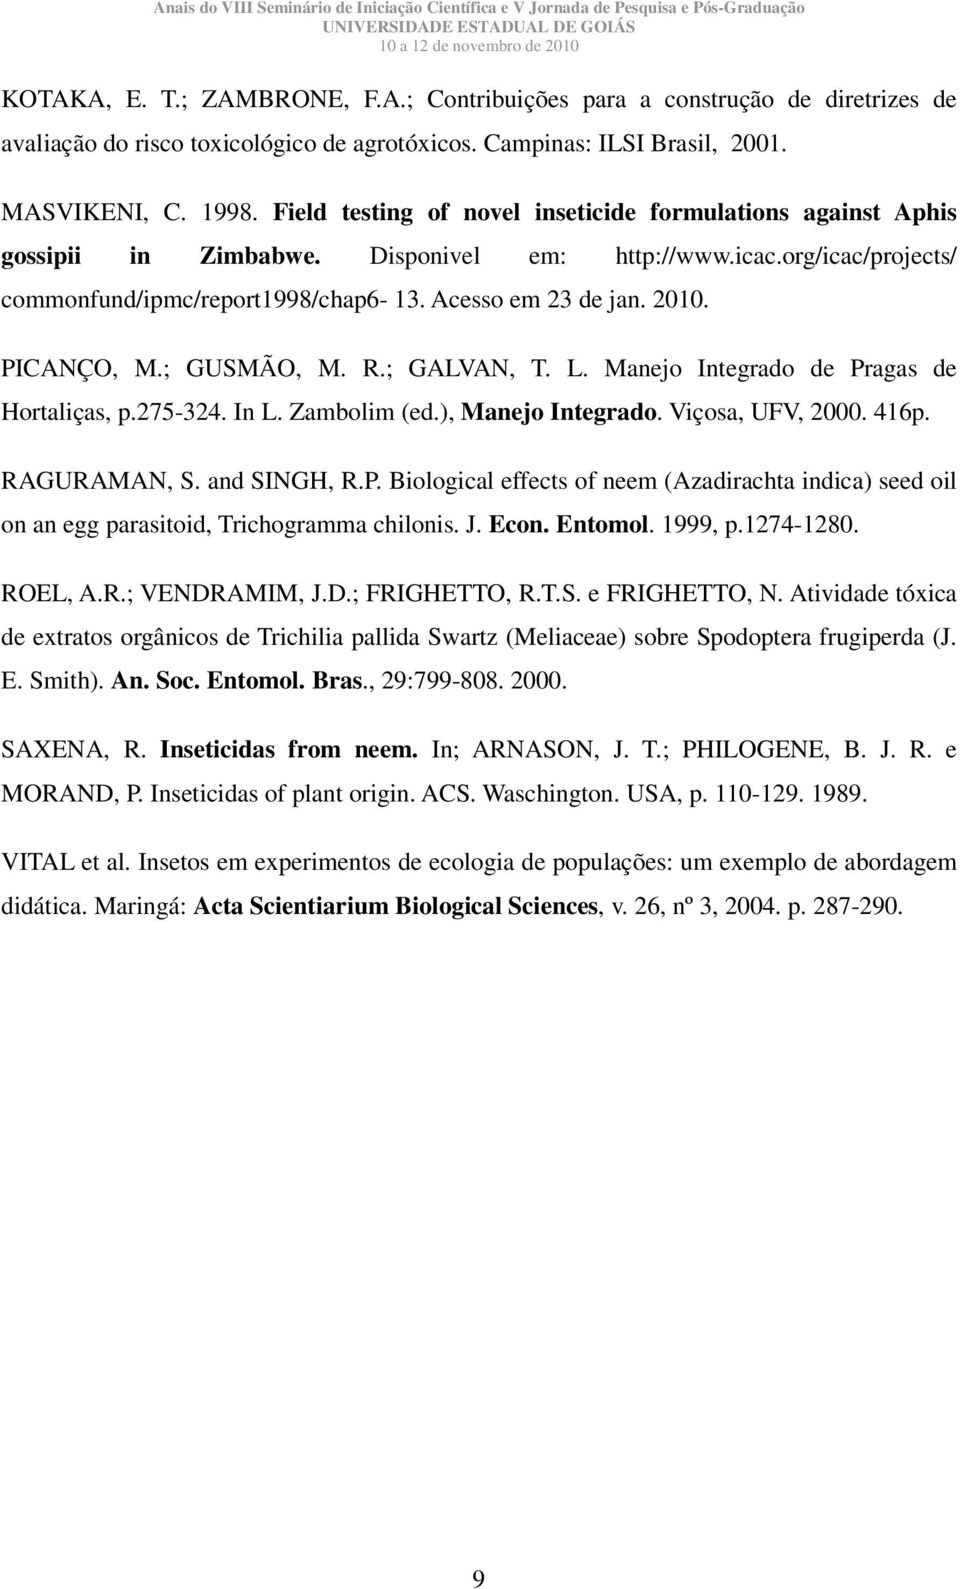 PICANÇO, M.; GUSMÃO, M. R.; GALVAN, T. L. Manejo Integrado de Pragas de Hortaliças, p.275-324. In L. Zambolim (ed.), Manejo Integrado. Viçosa, UFV, 2000. 416p. RAGURAMAN, S. and SINGH, R.P. Biological effects of neem (Azadirachta indica) seed oil on an egg parasitoid, Trichogramma chilonis.